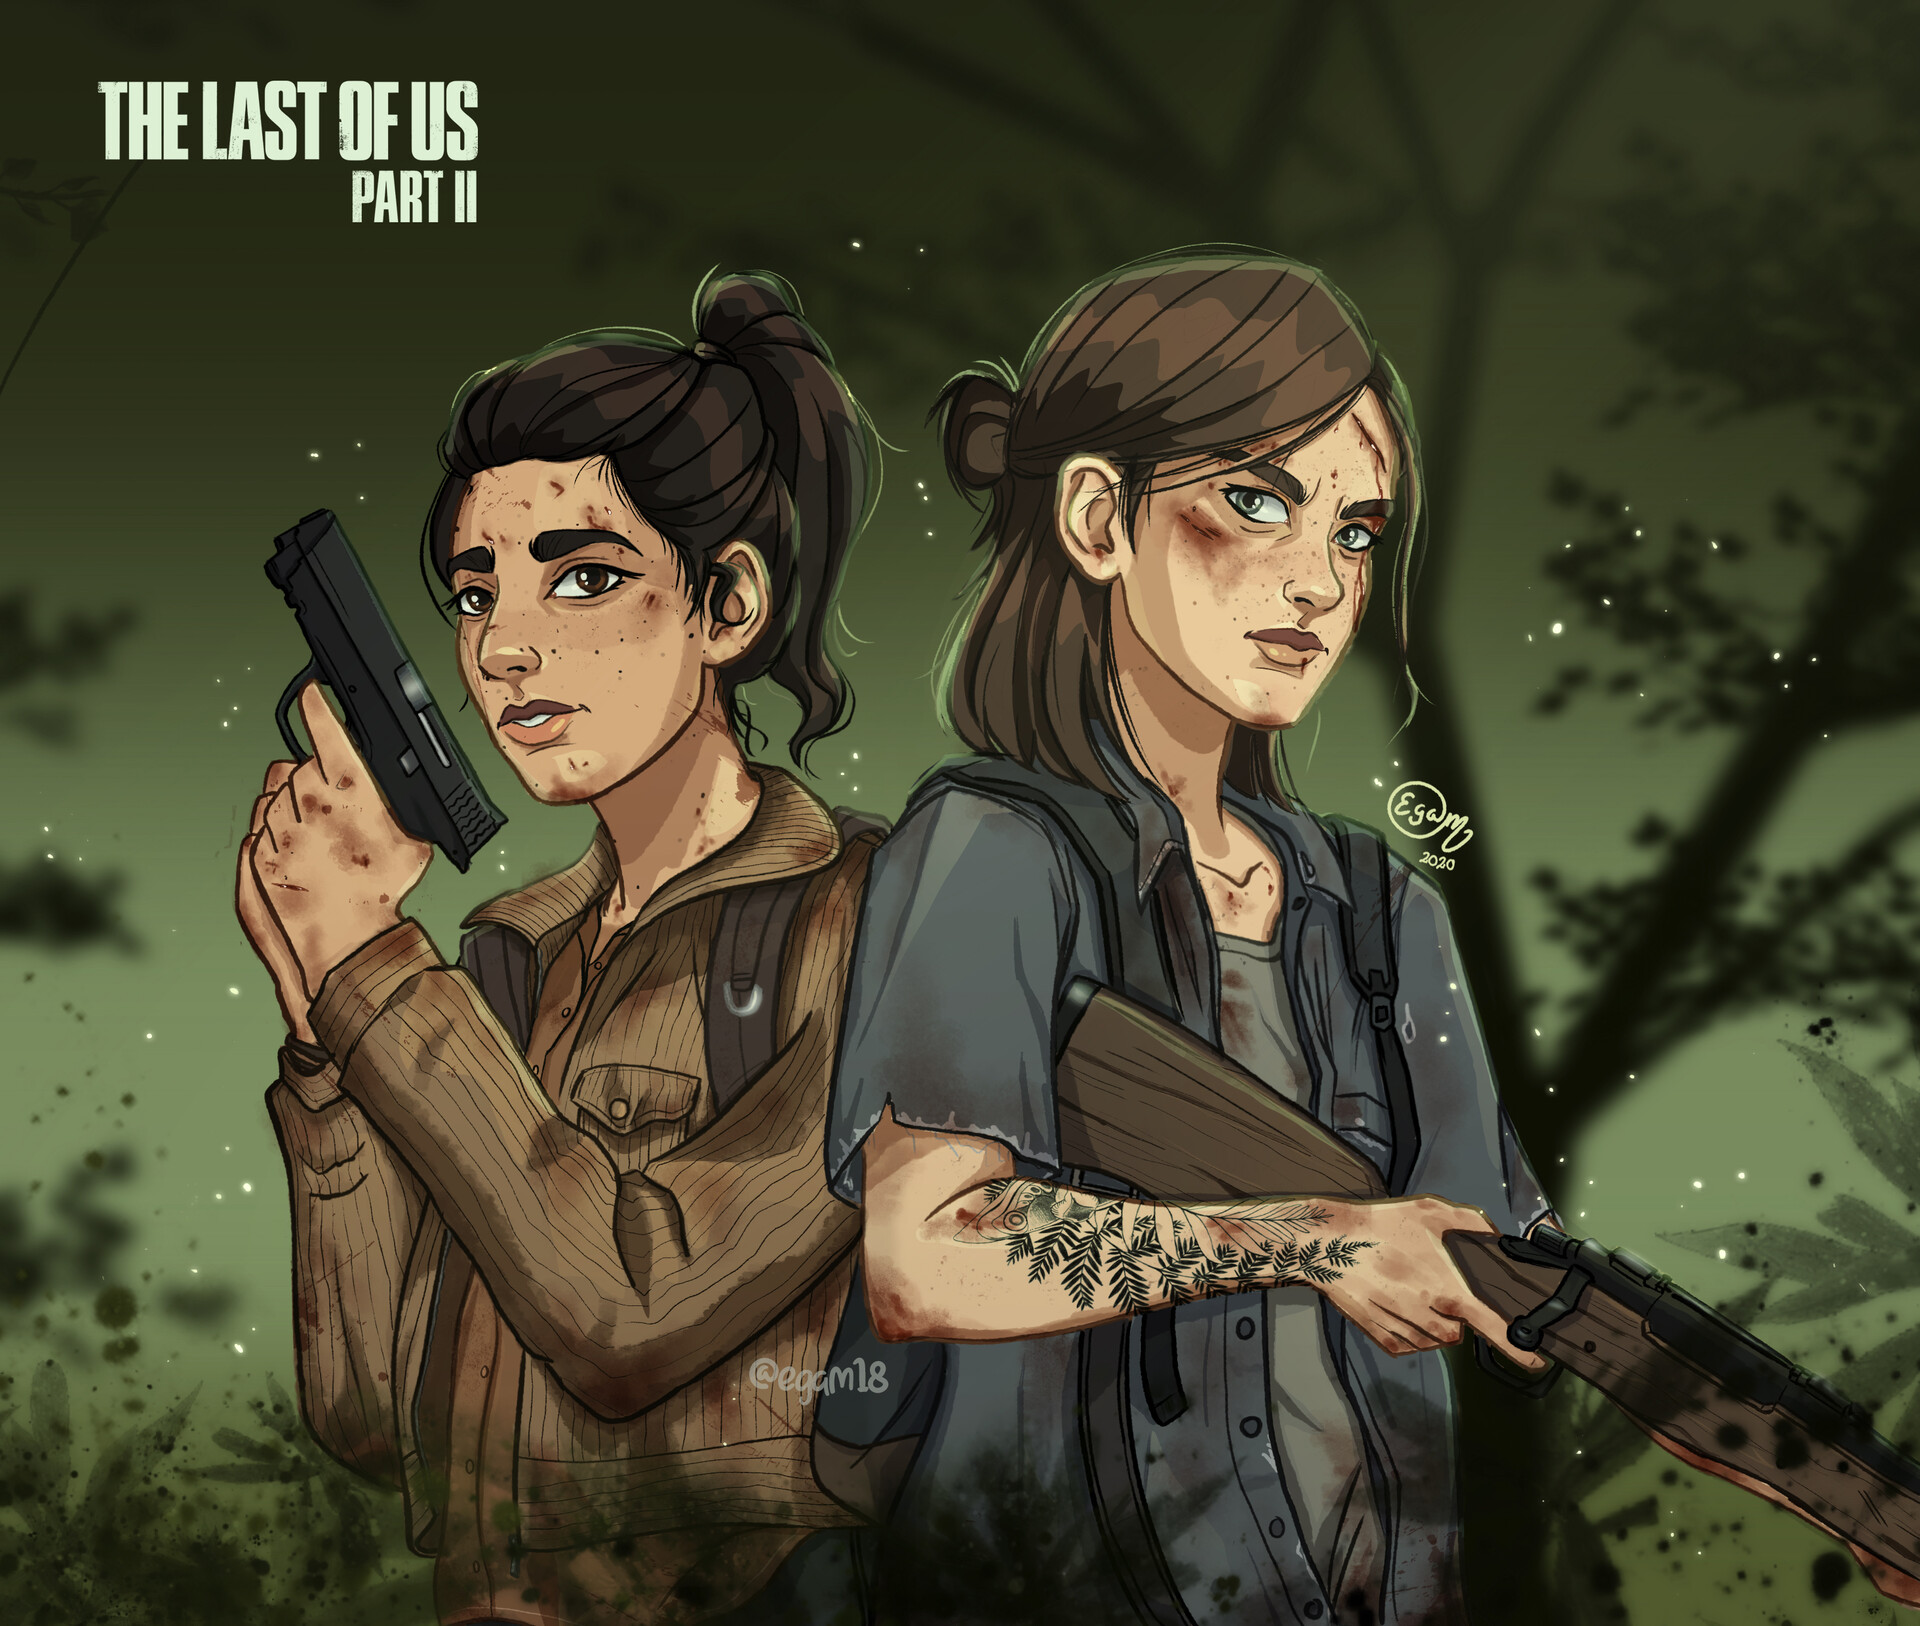 ArtStation - Ellie - The Last of Us 2 Fanart